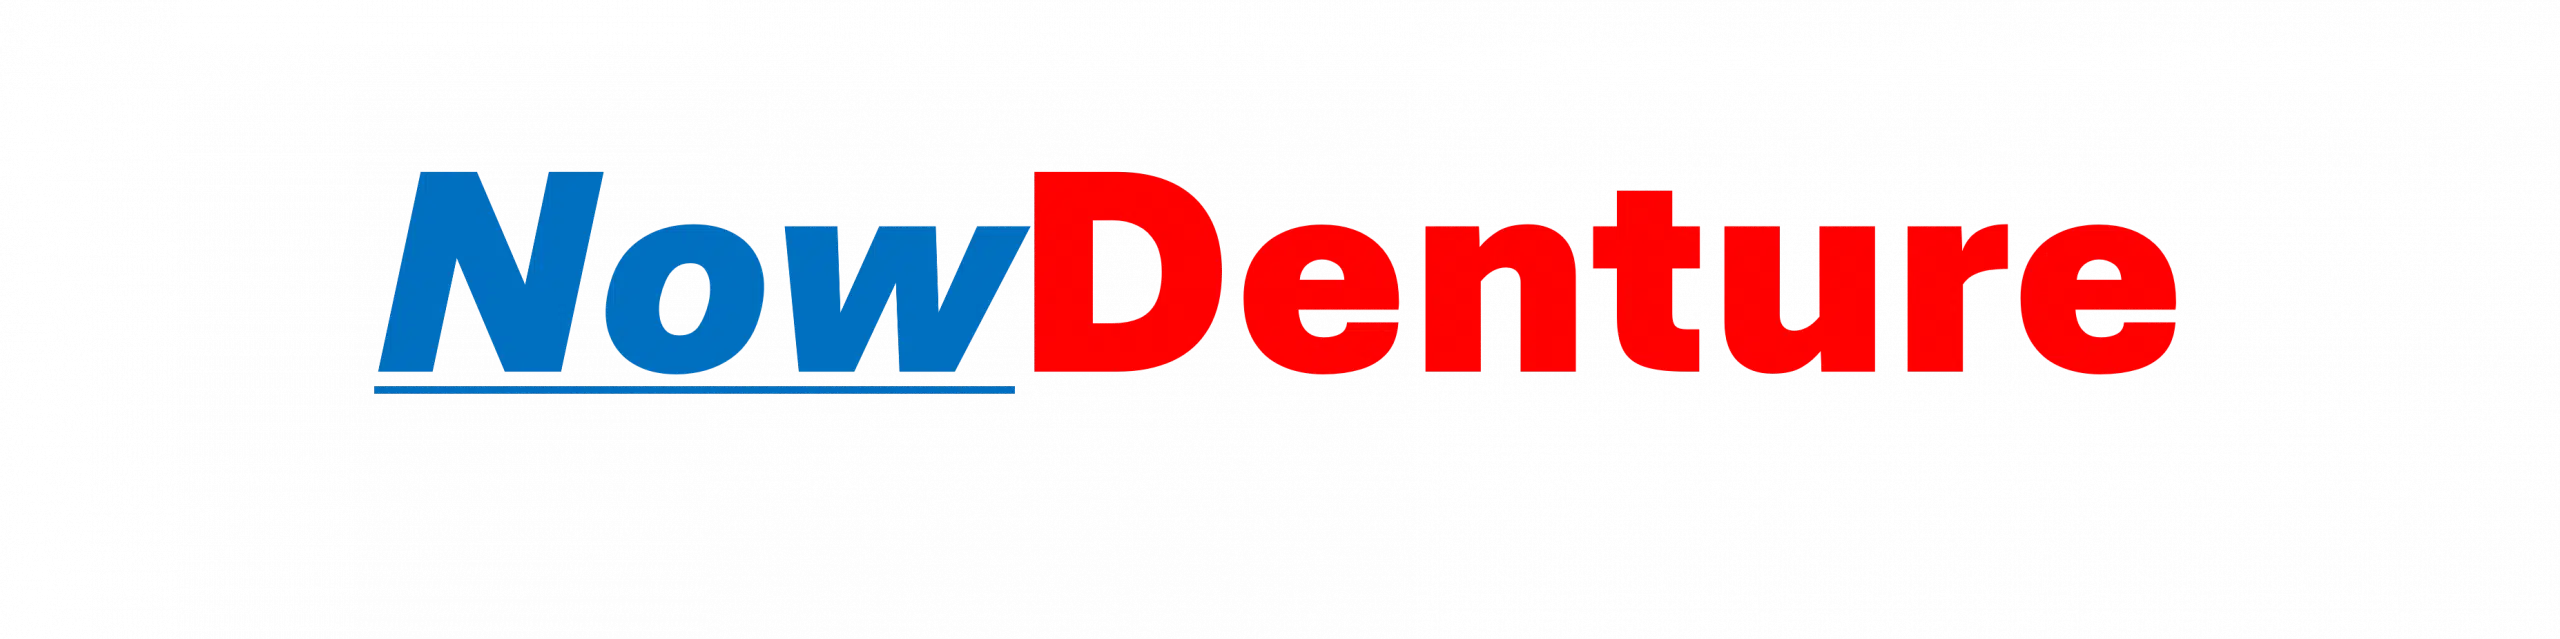 now denture logo